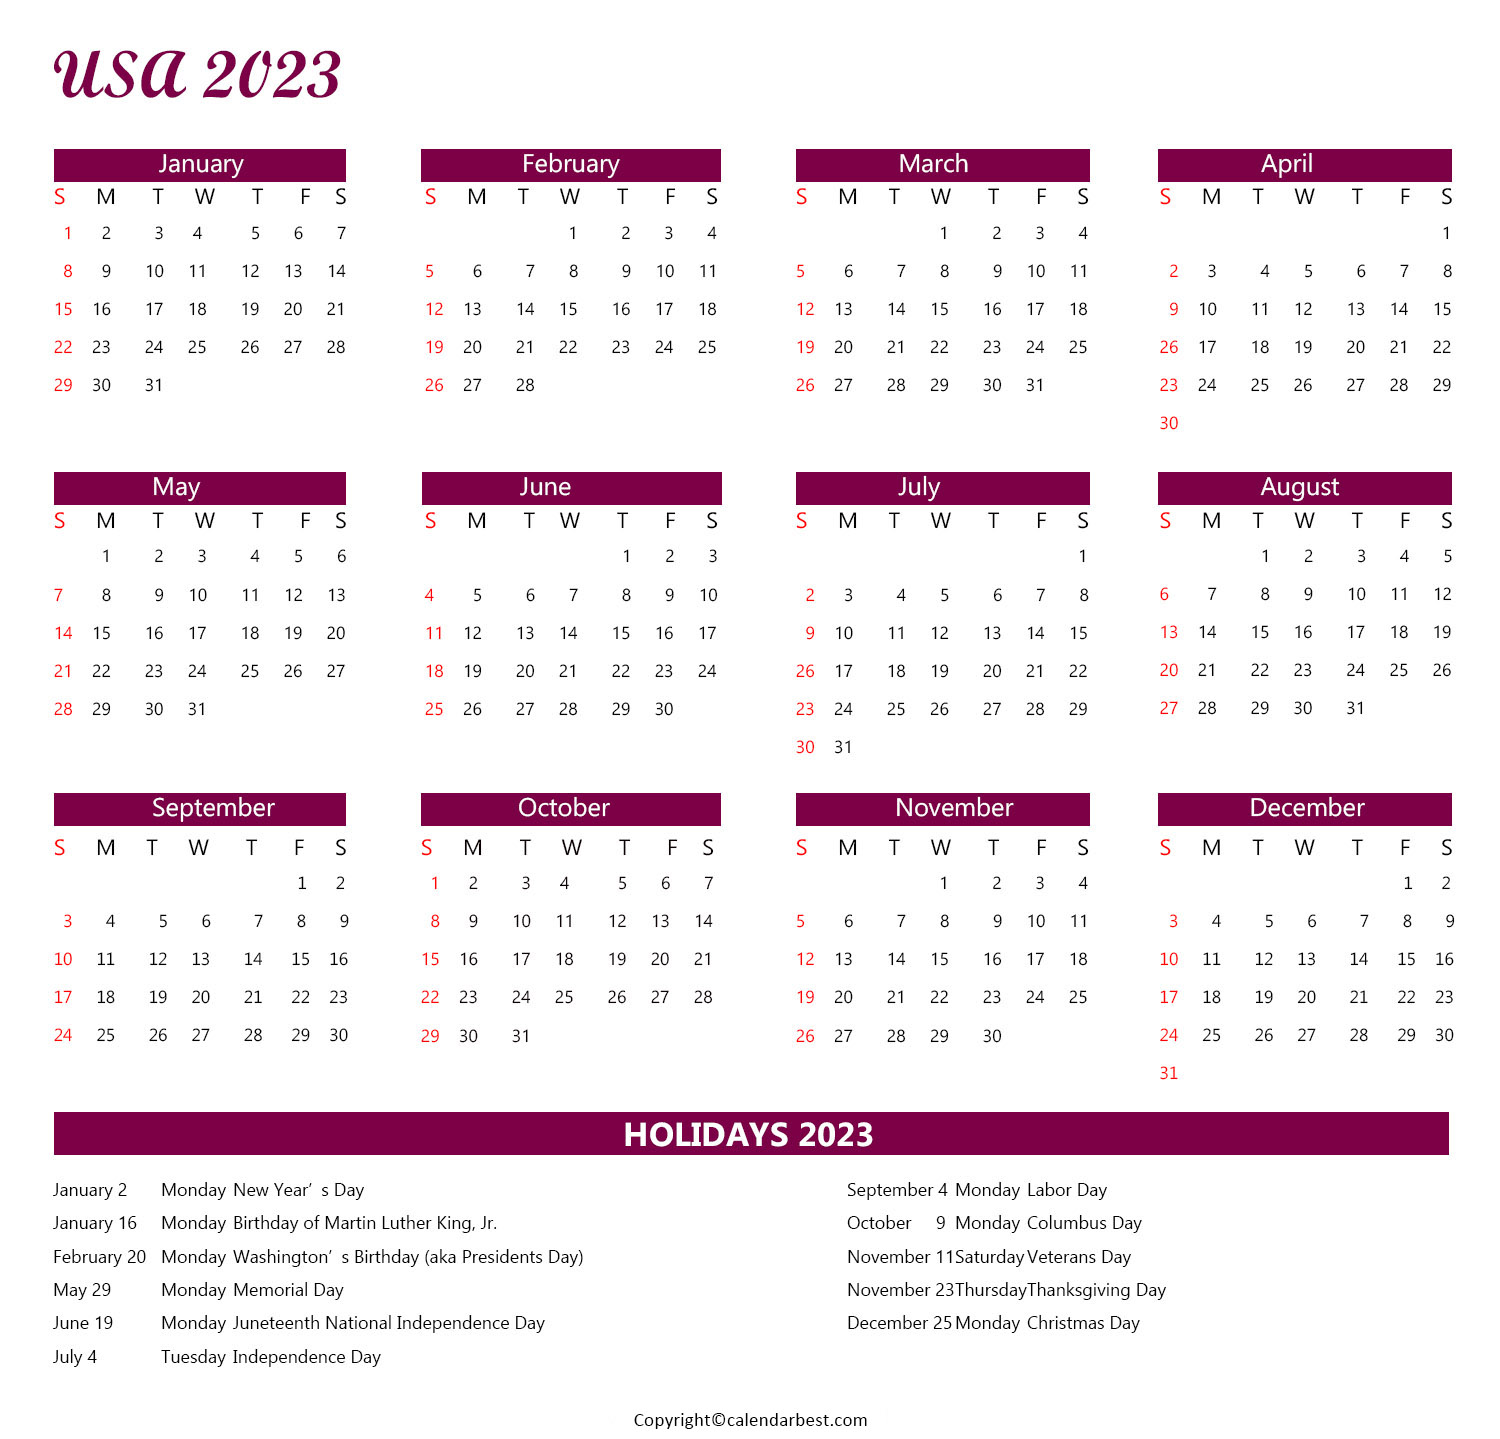 USA Calendar 2023 with Holidays